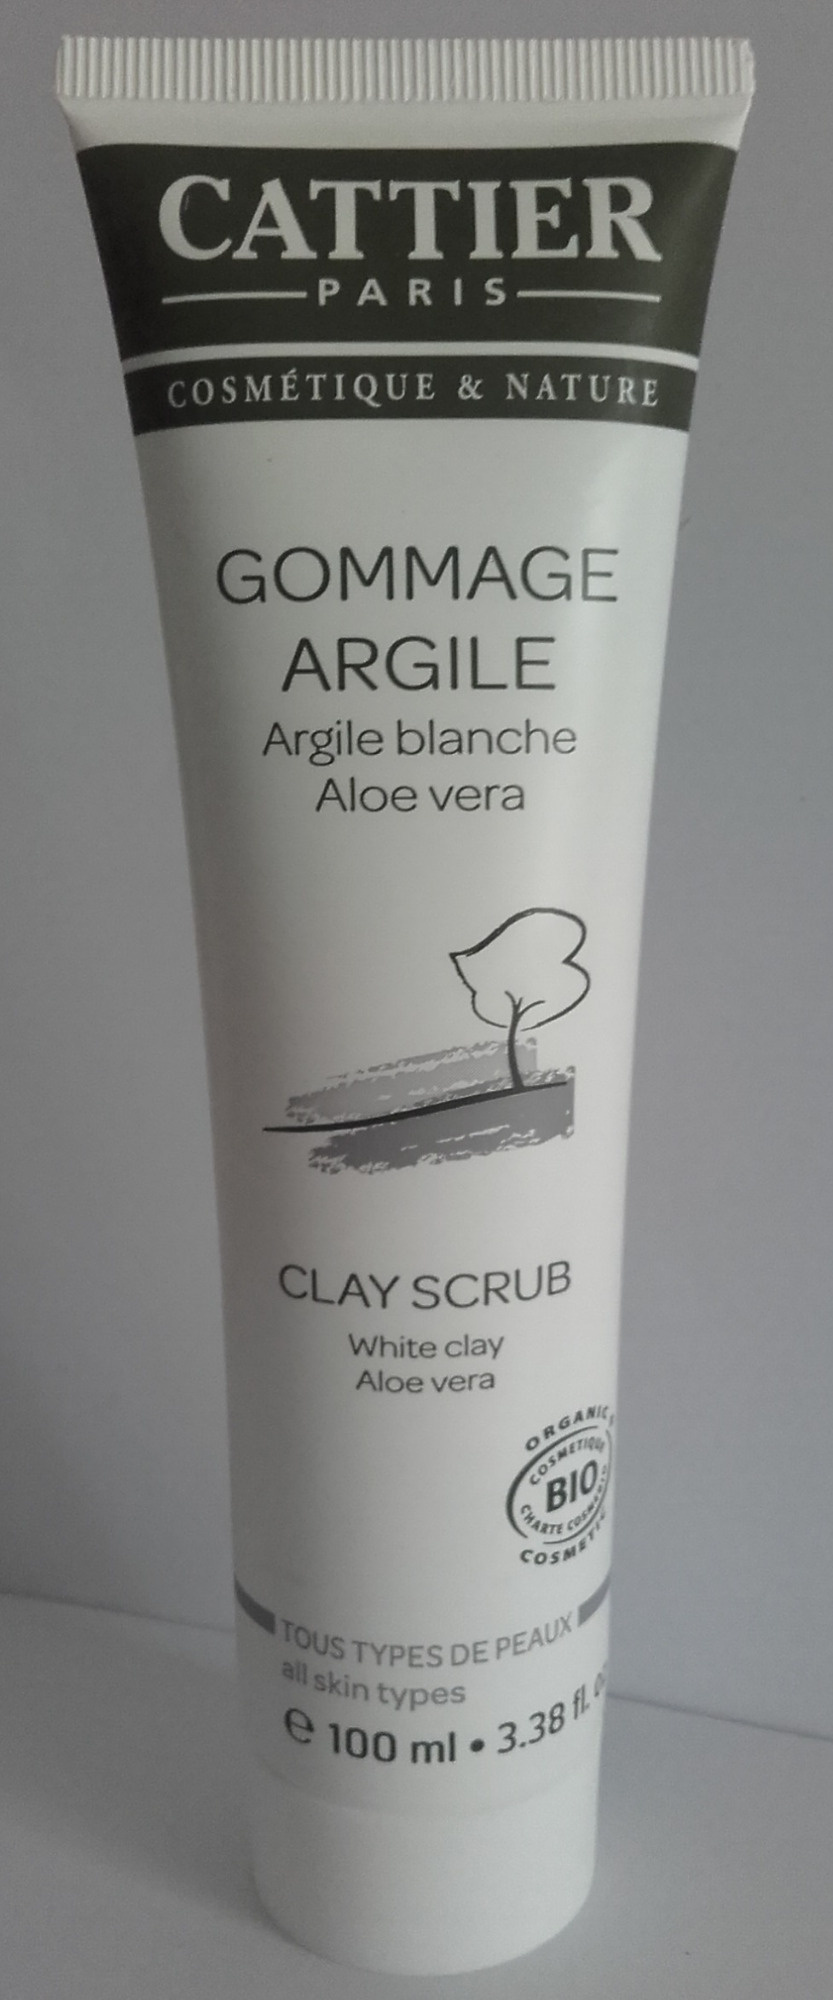 Gommage Argile - Argile blanche Aloe Vera - Product - fr